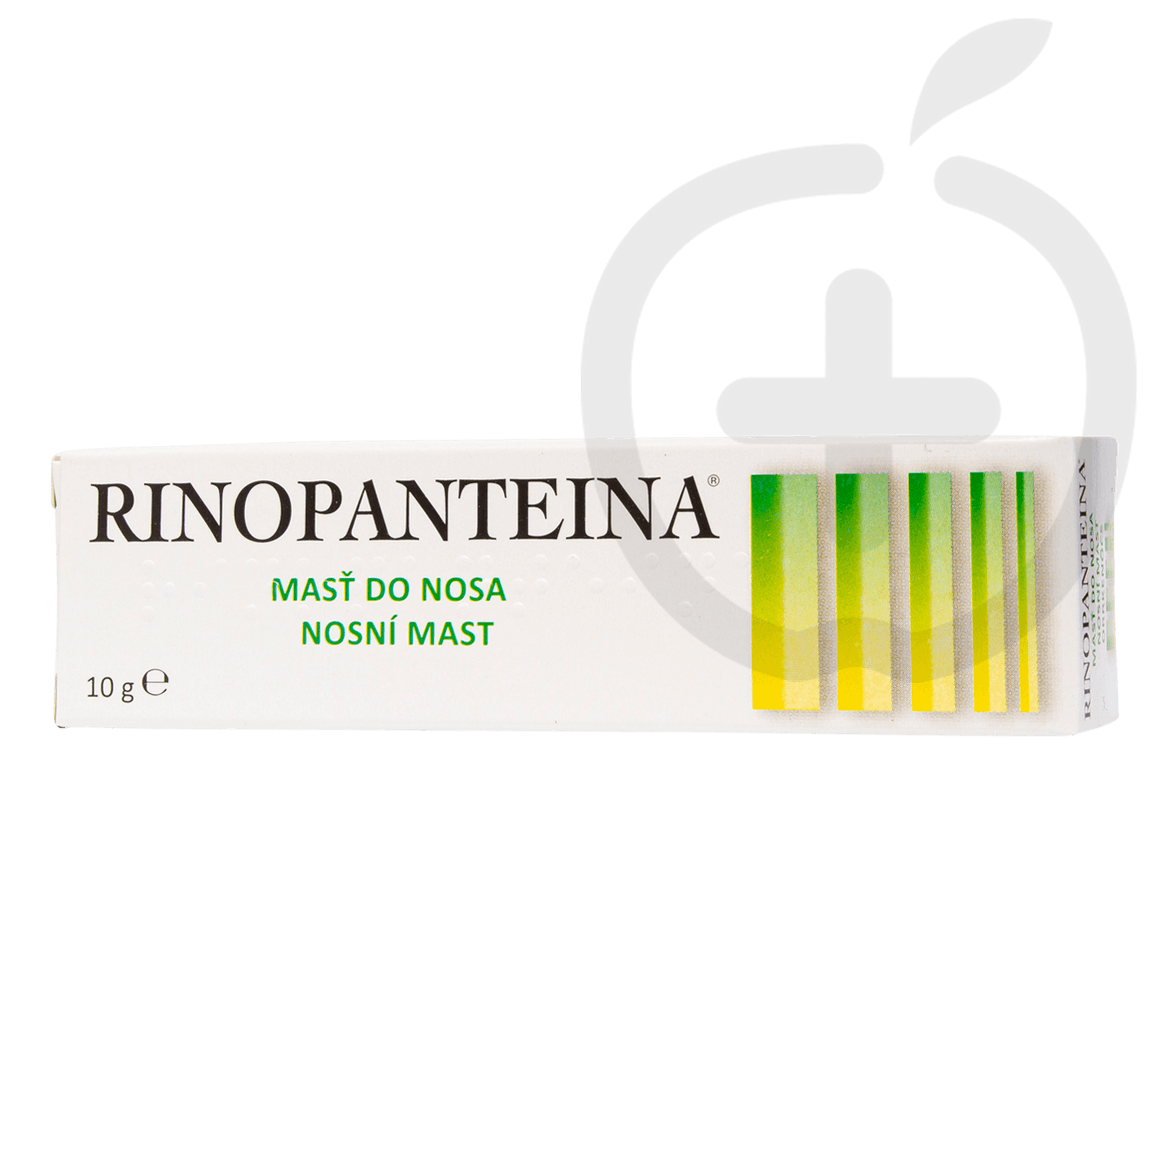 Rinopanteina Orrkenőcs